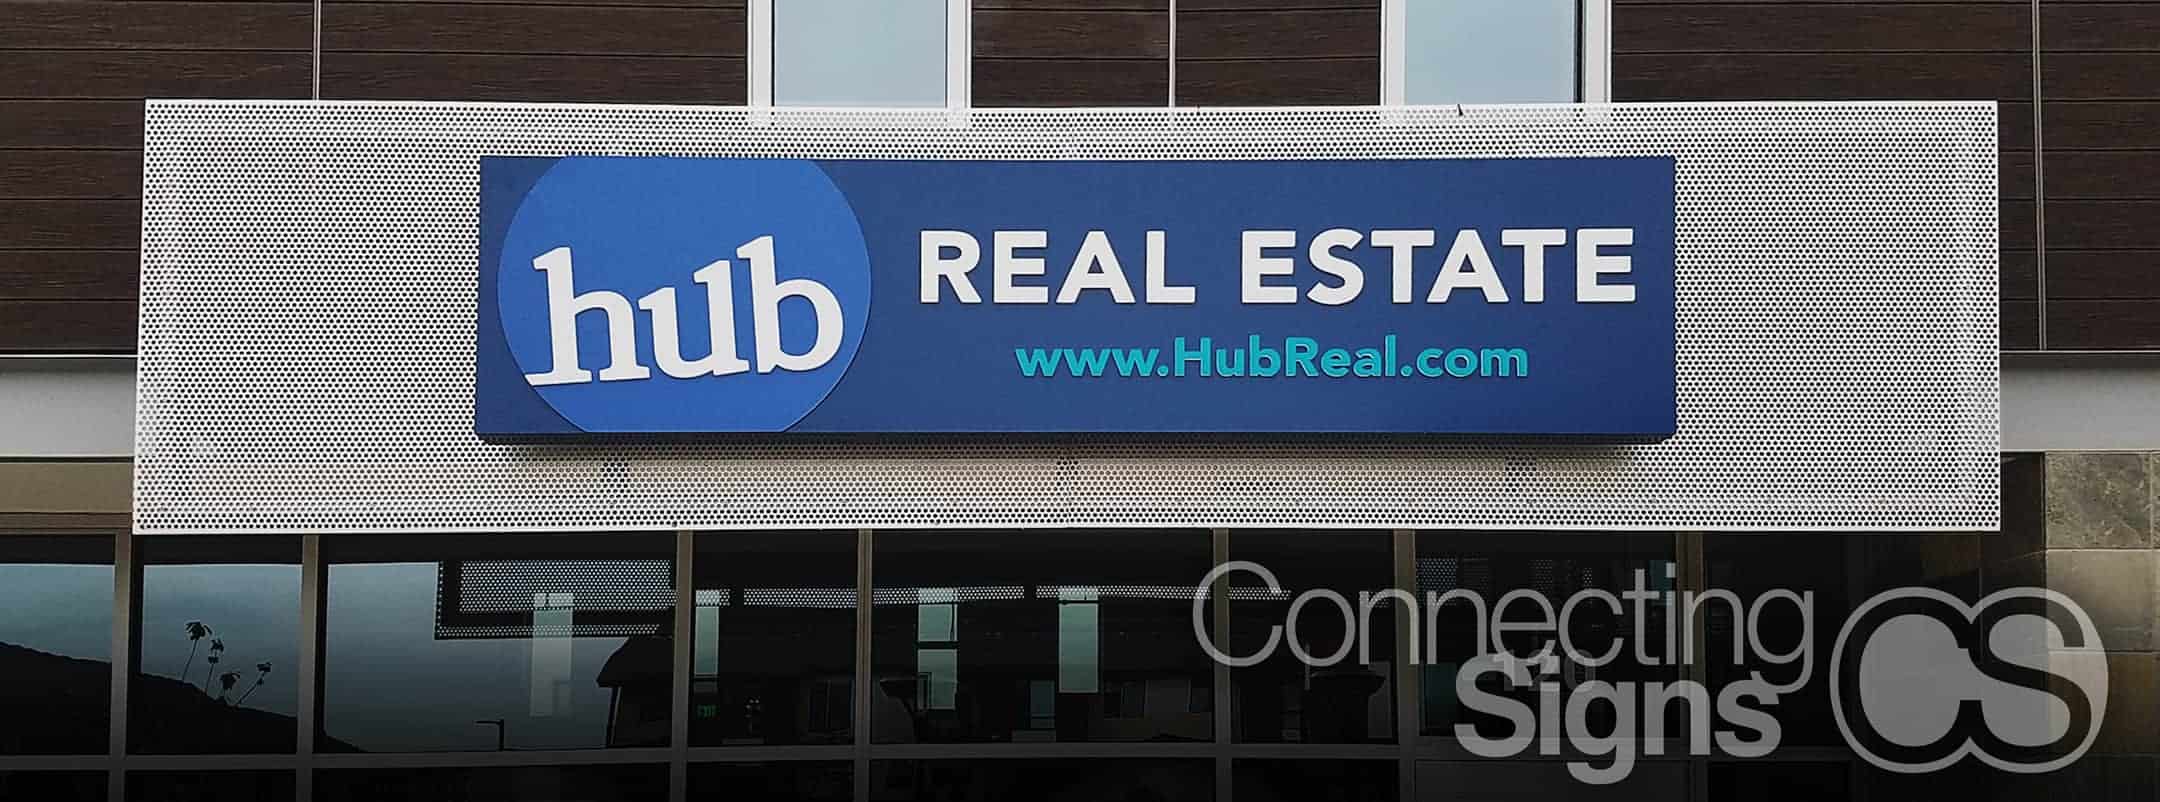 Real estate hub sign